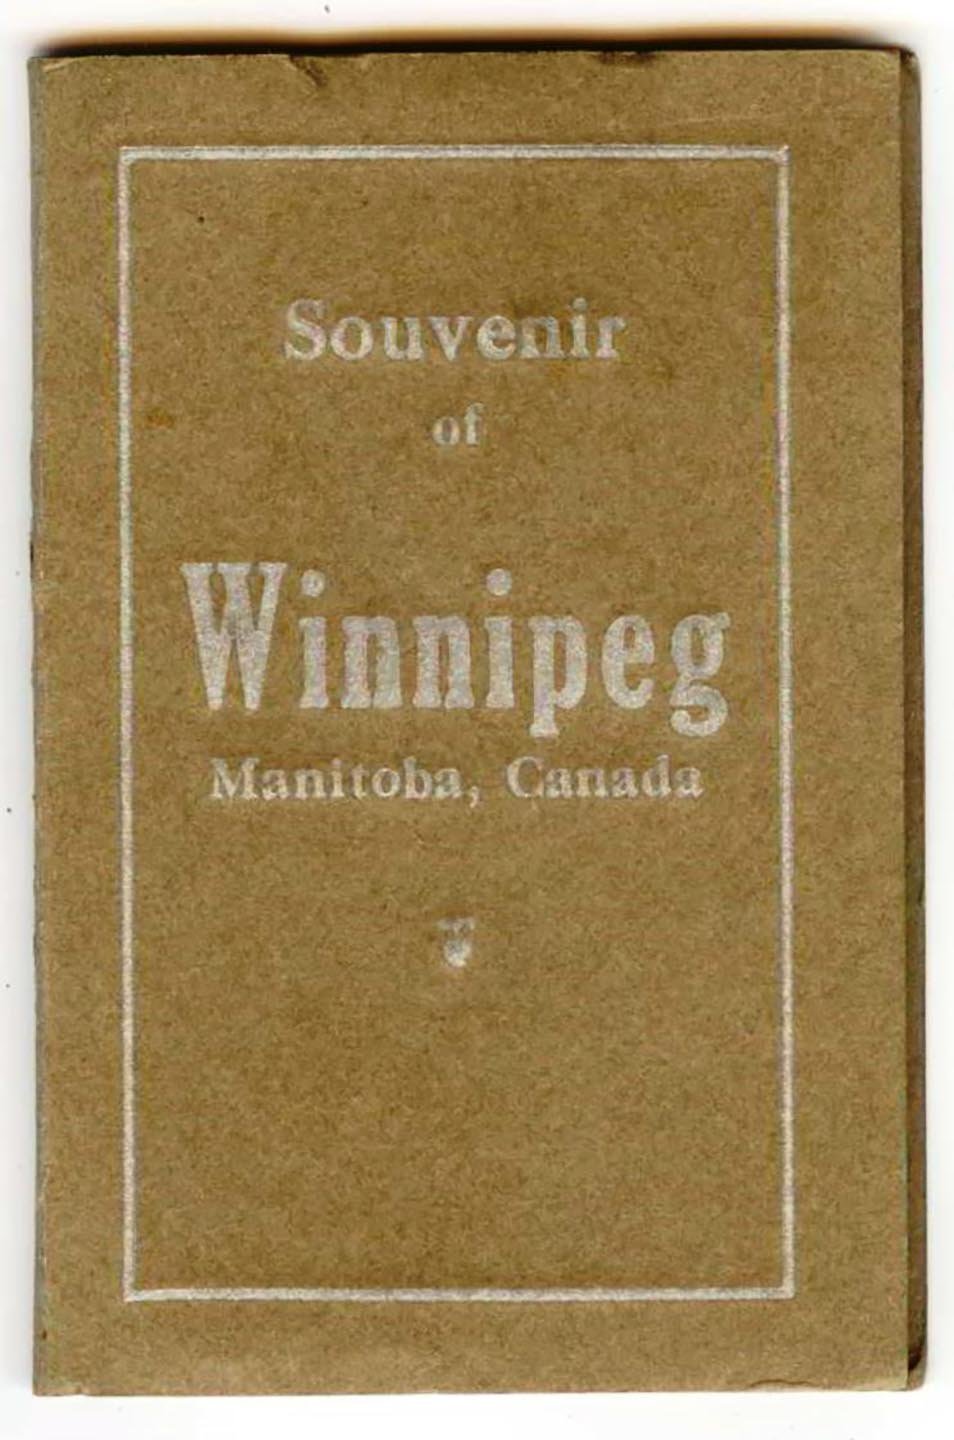 Souvenir of Winnipeg, Manitoba, Canada